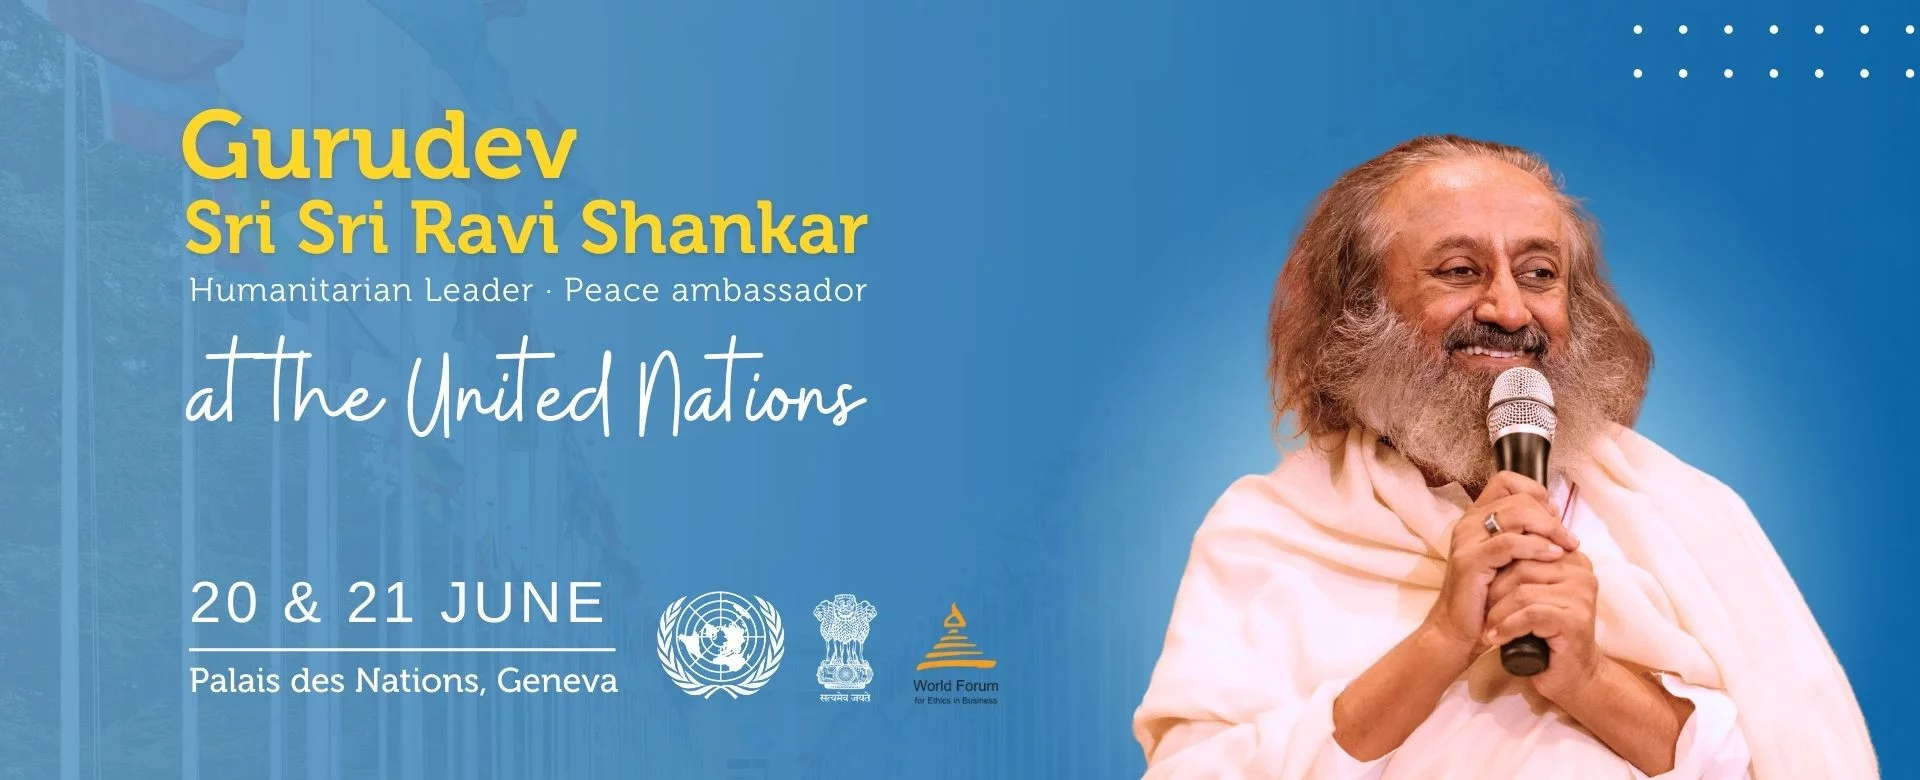 Gurudev in United Nations